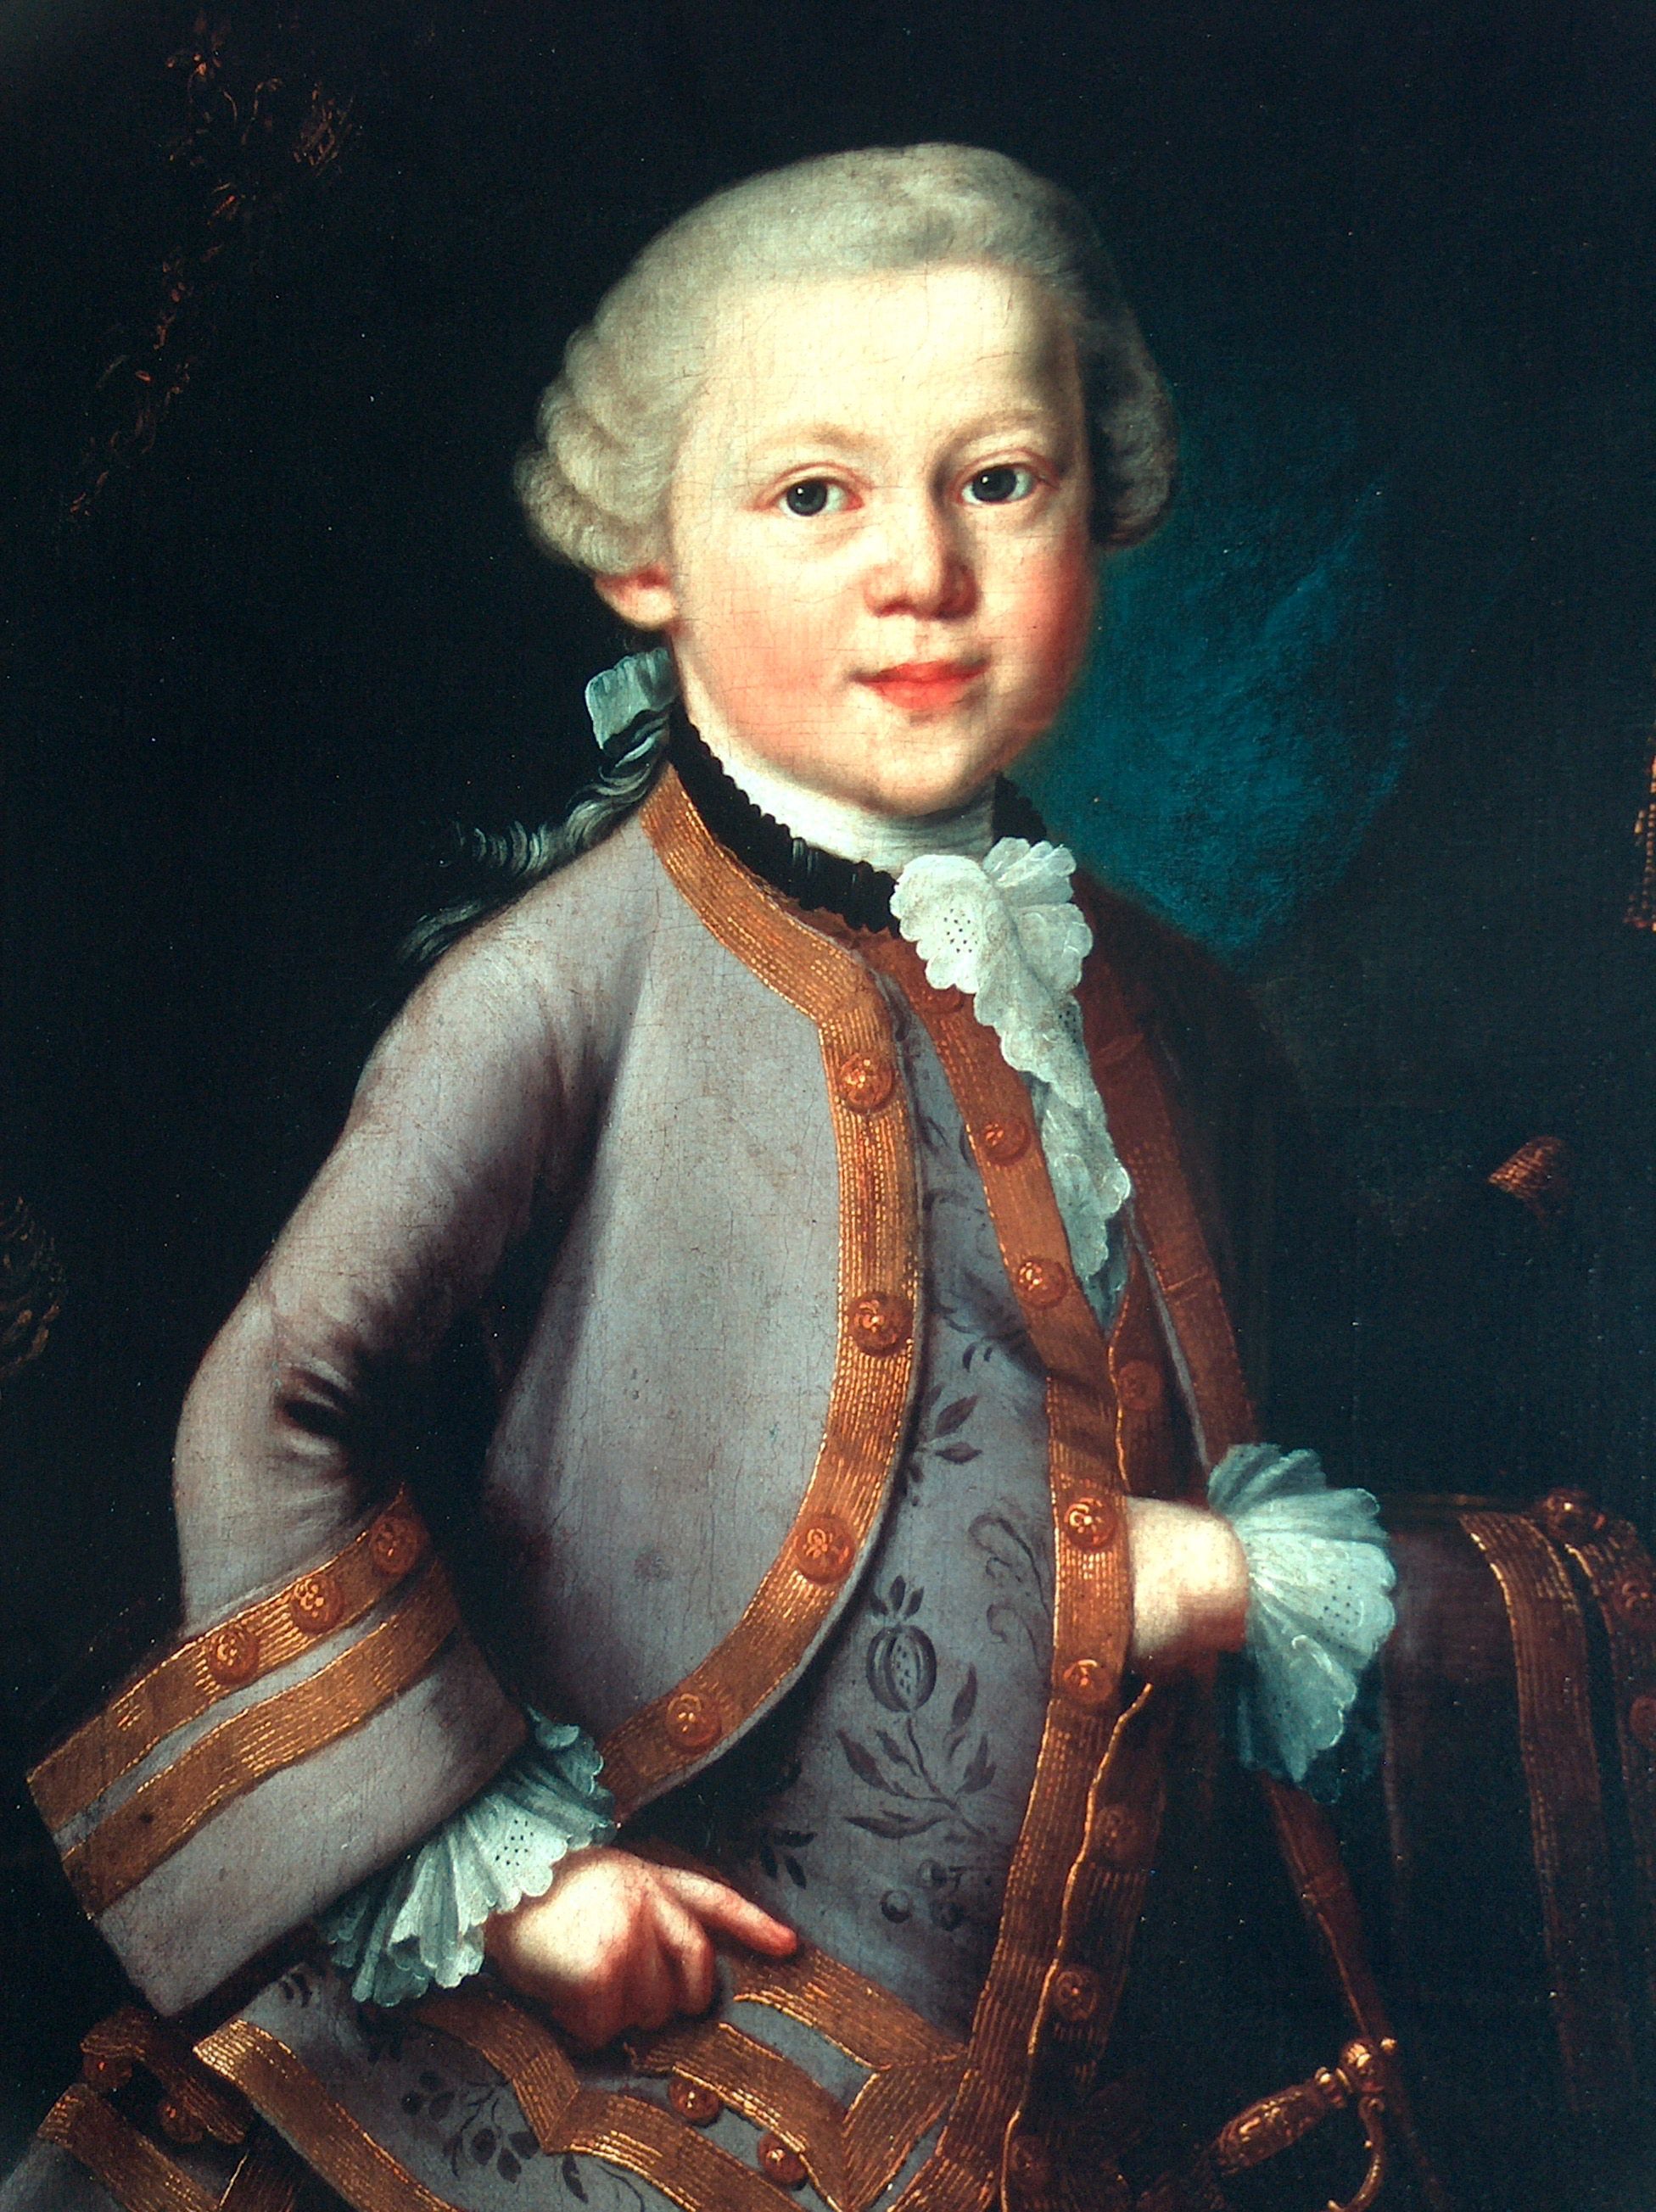 Mozart may have had an ASD. (www2.bon.de)